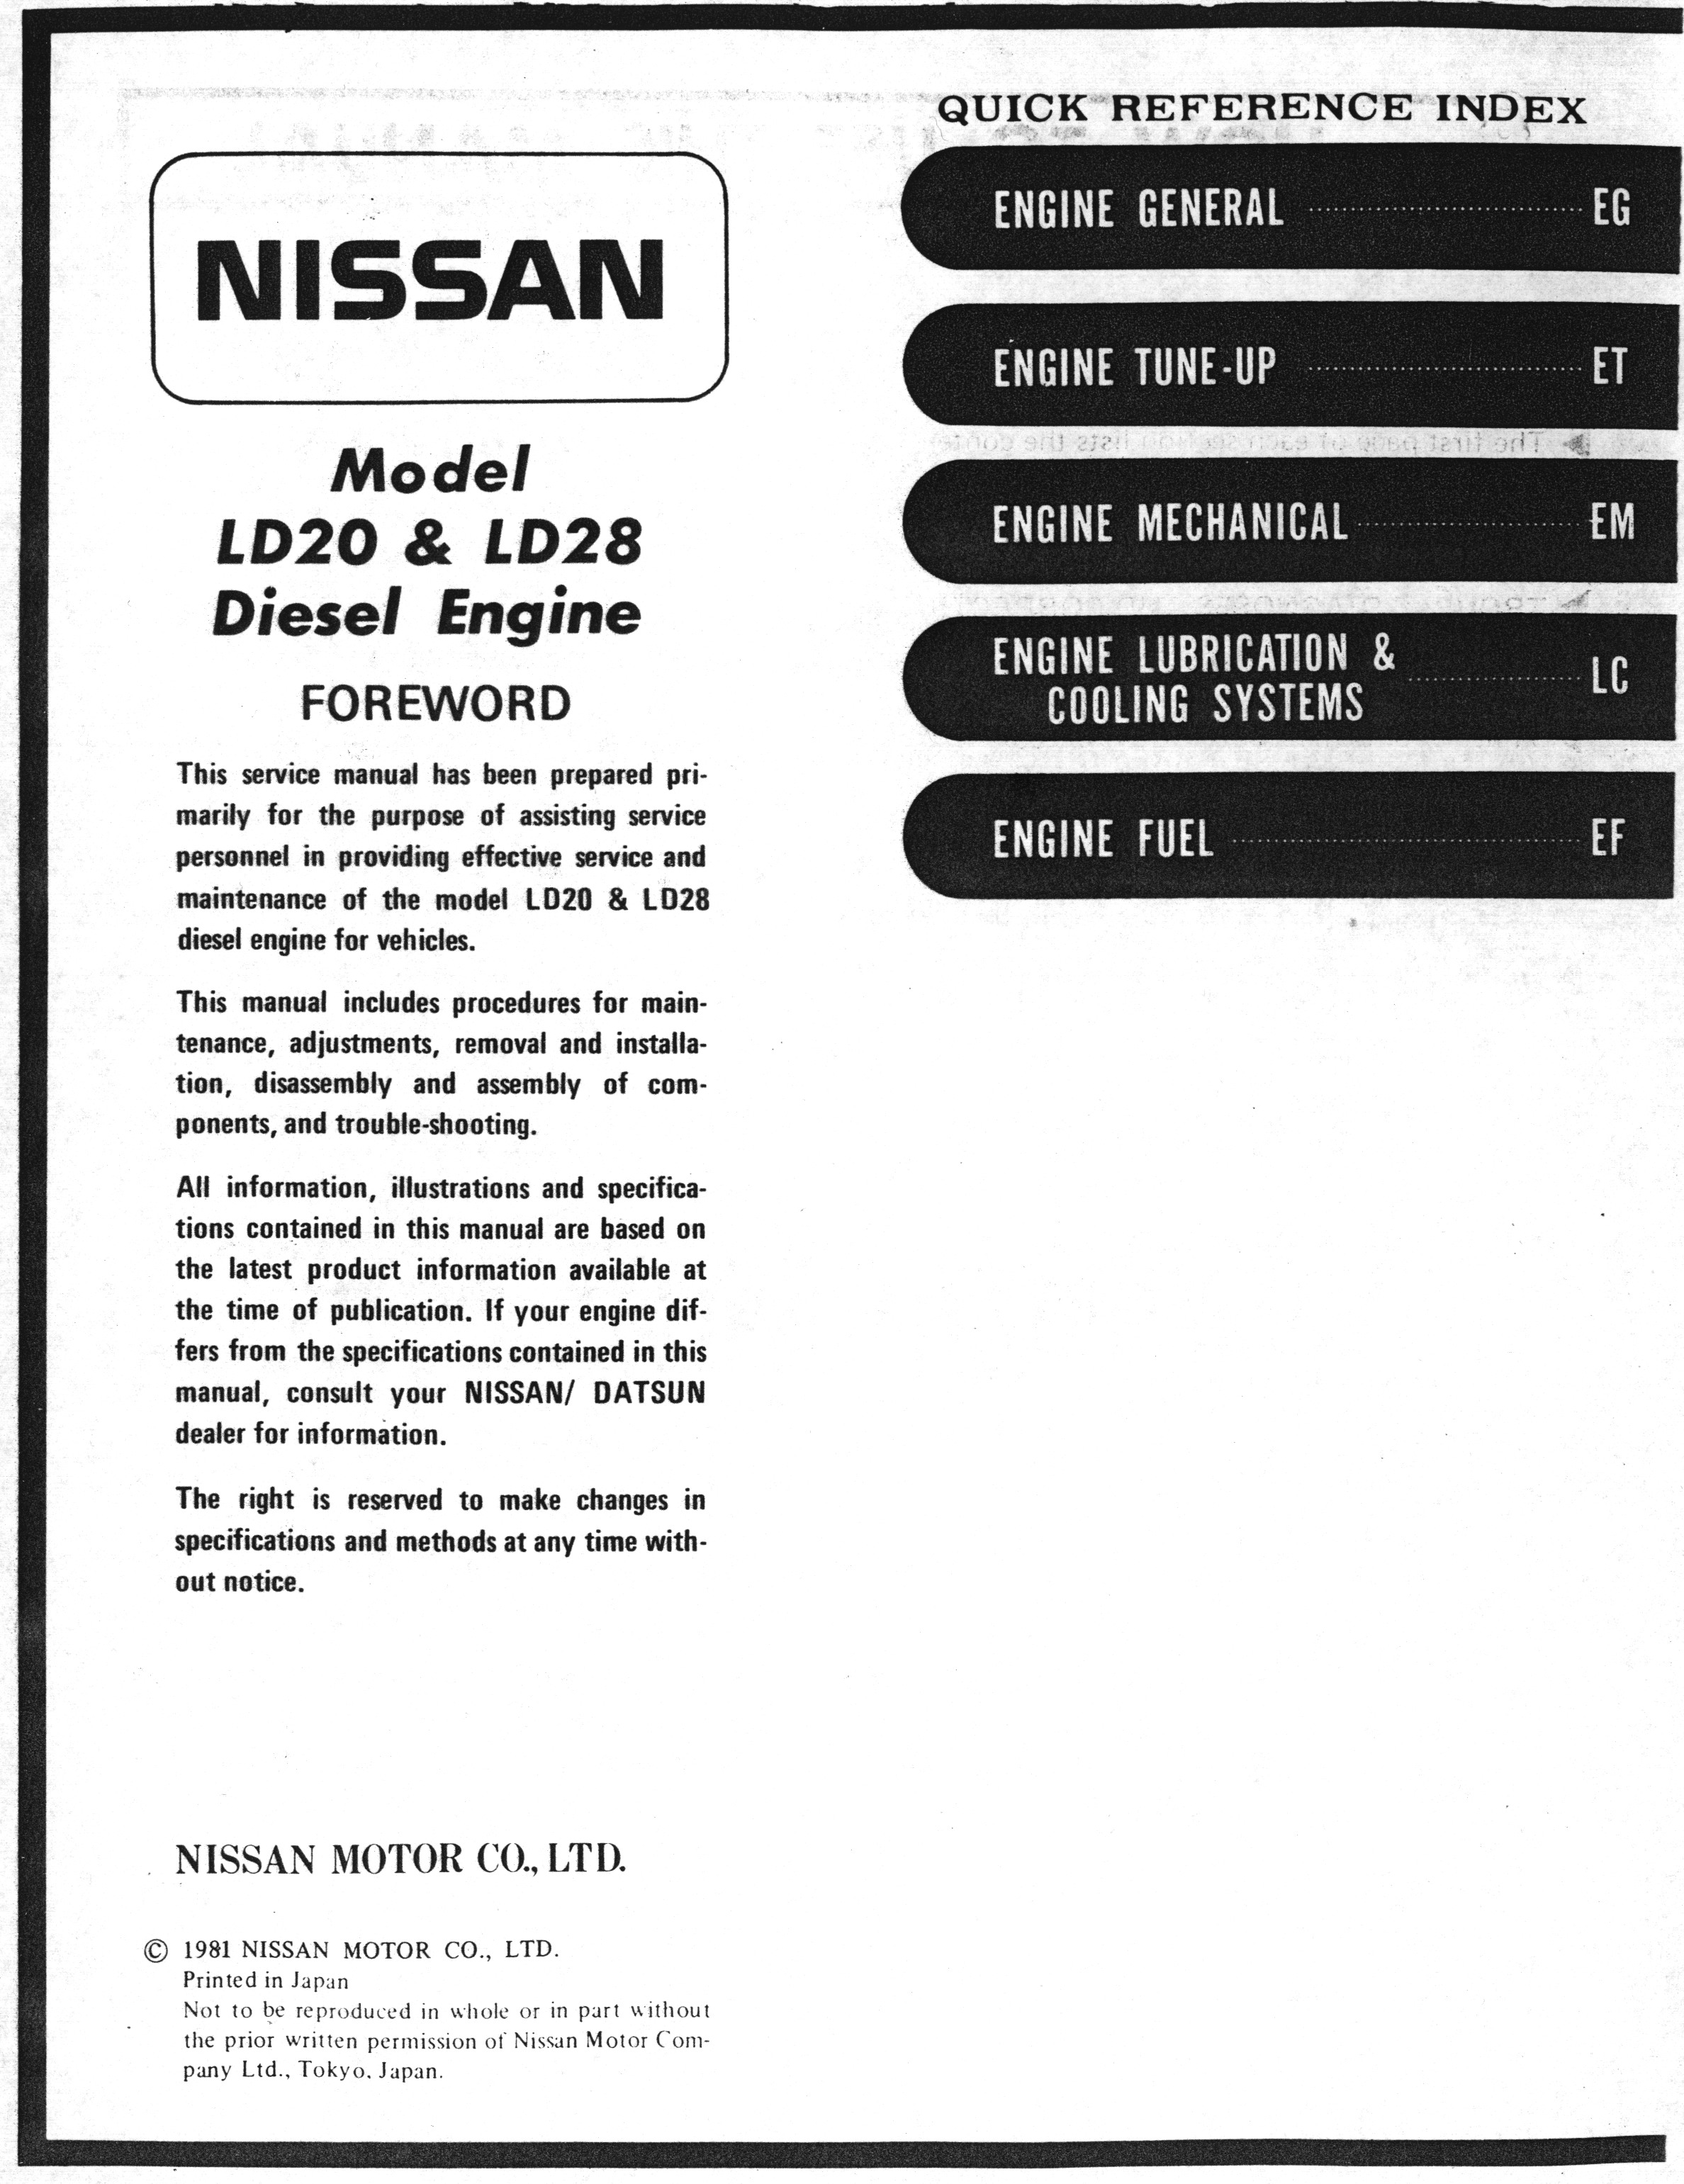 Nissan ld28 manual #6